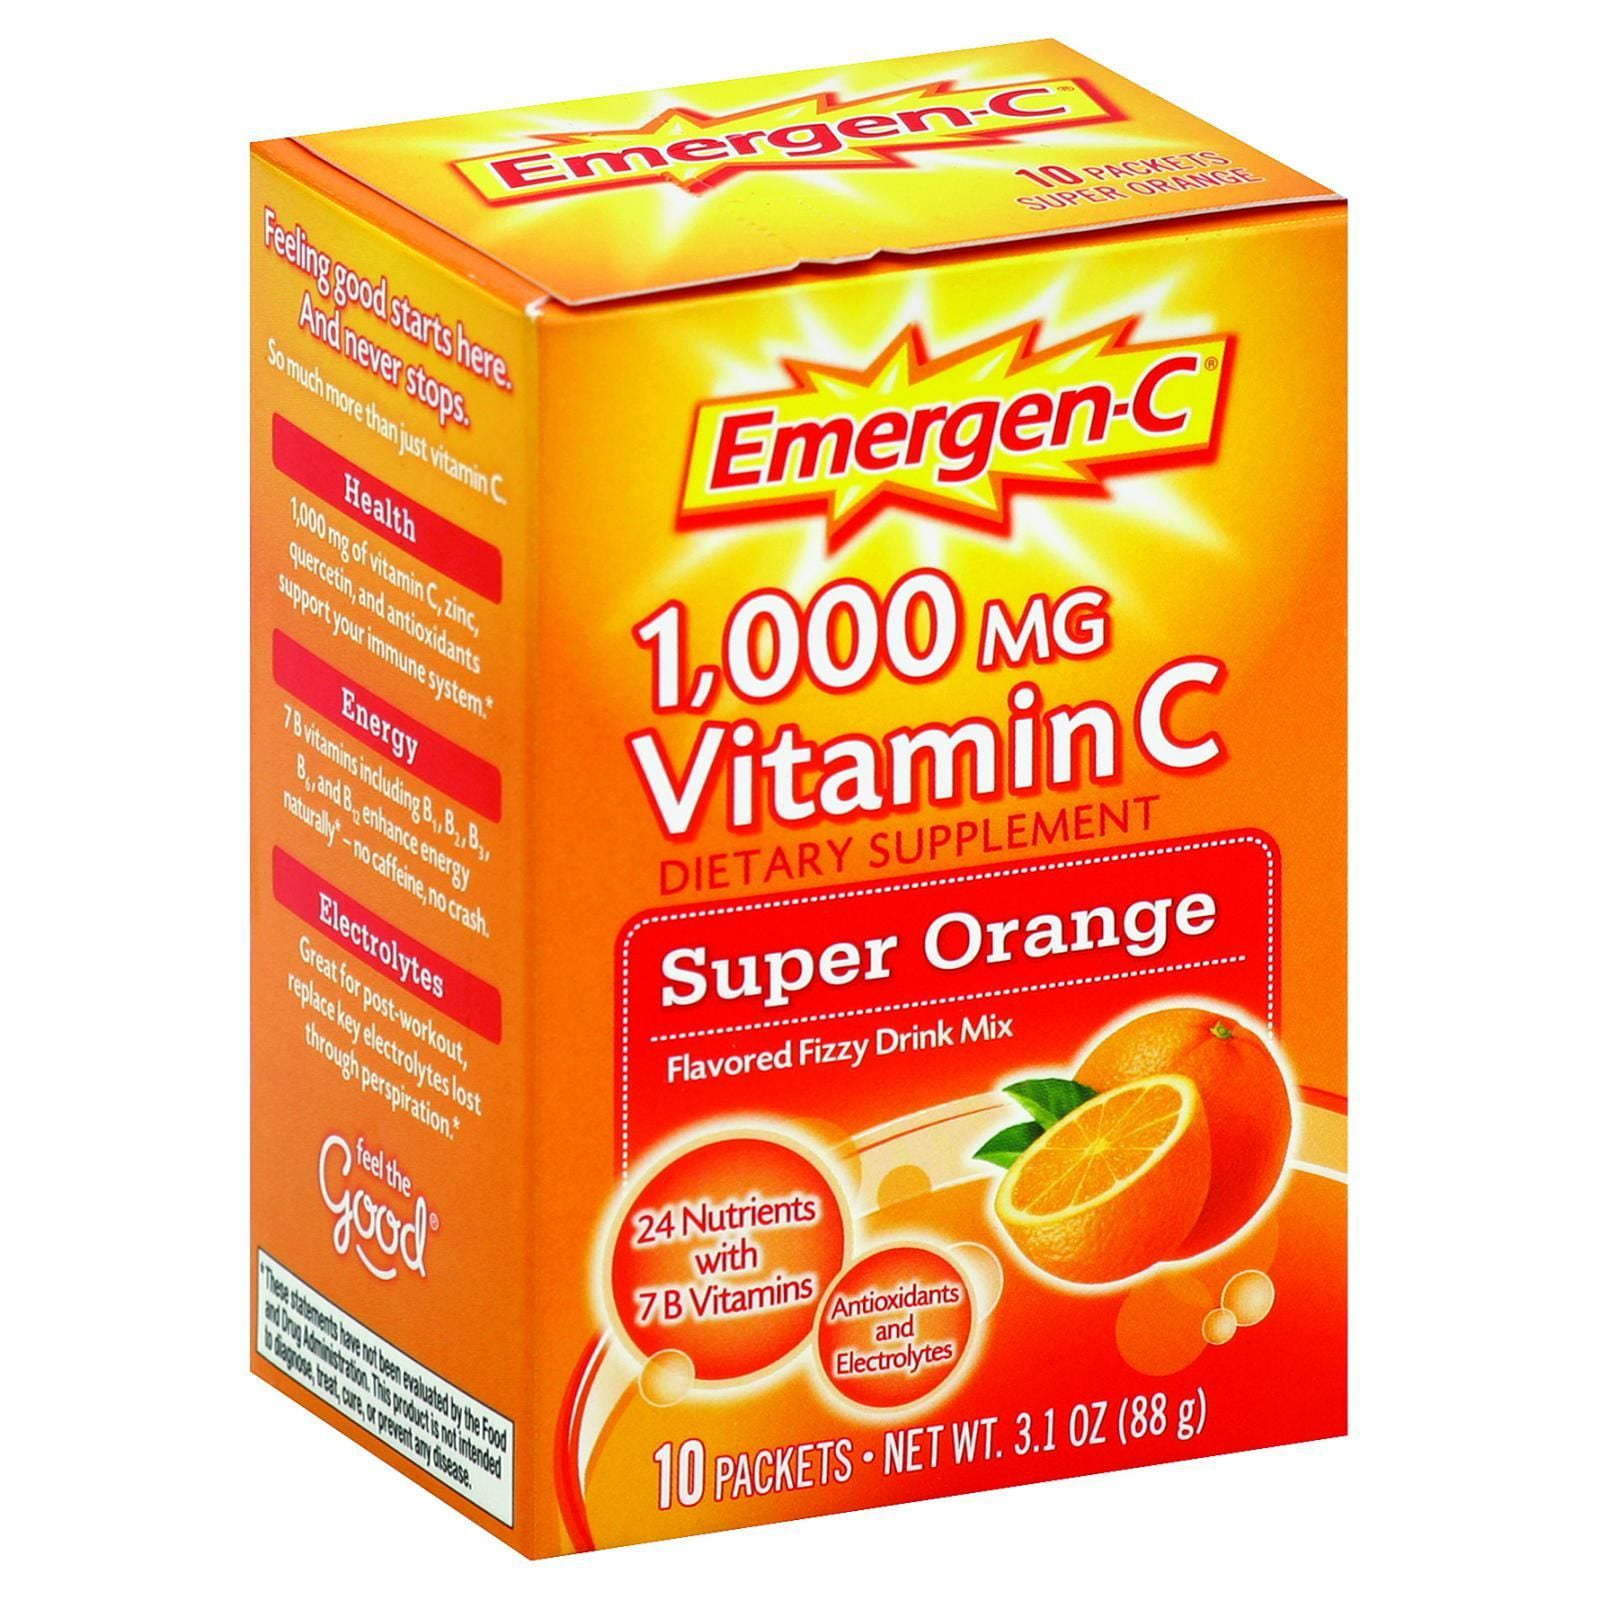 Vitamin o. Vitamin c напиток. Оранжевые витамины для женщин. Что такое витамины. Напиток super Orange.